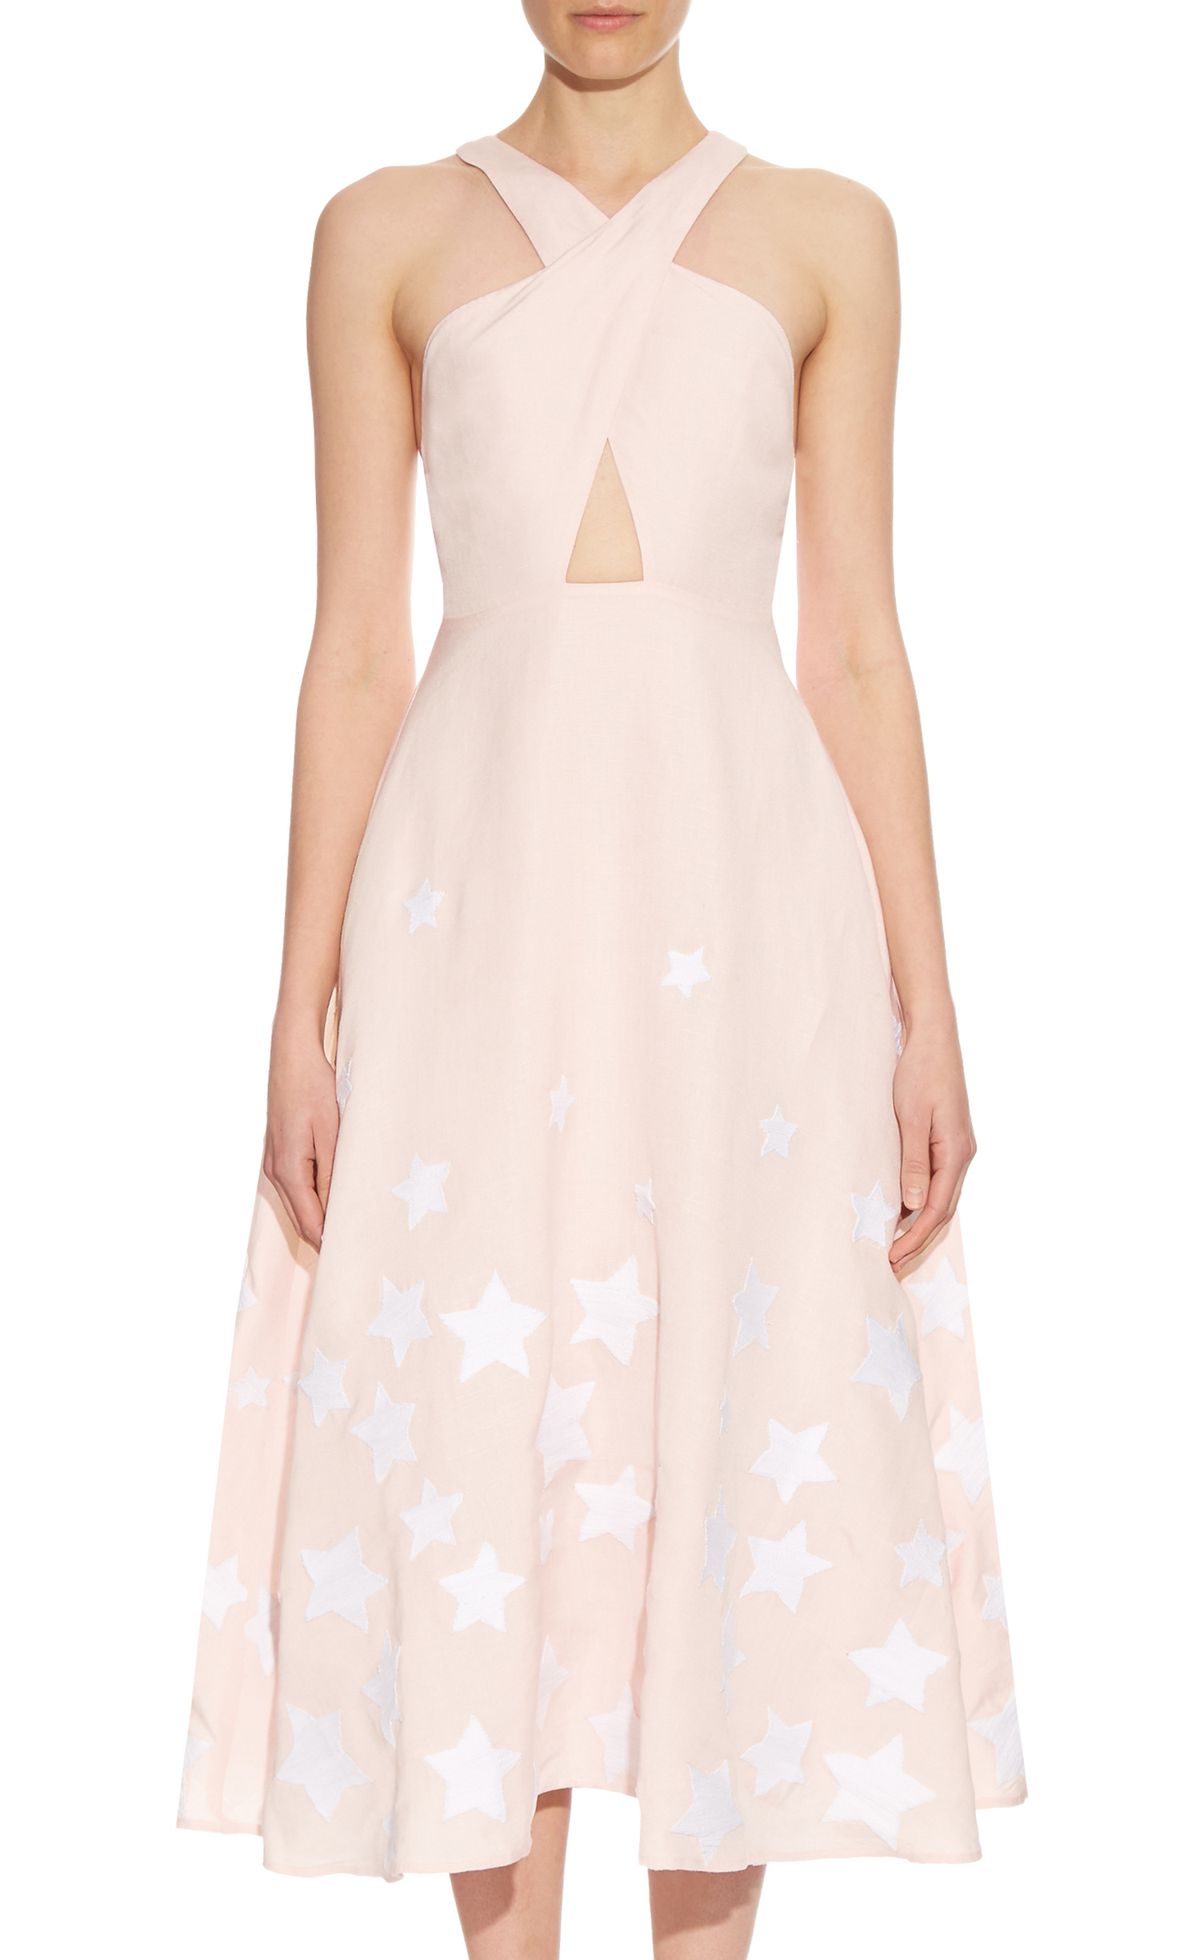 Mara Hoffman Star-Embroidered Cross-Front Midi Dress, $307